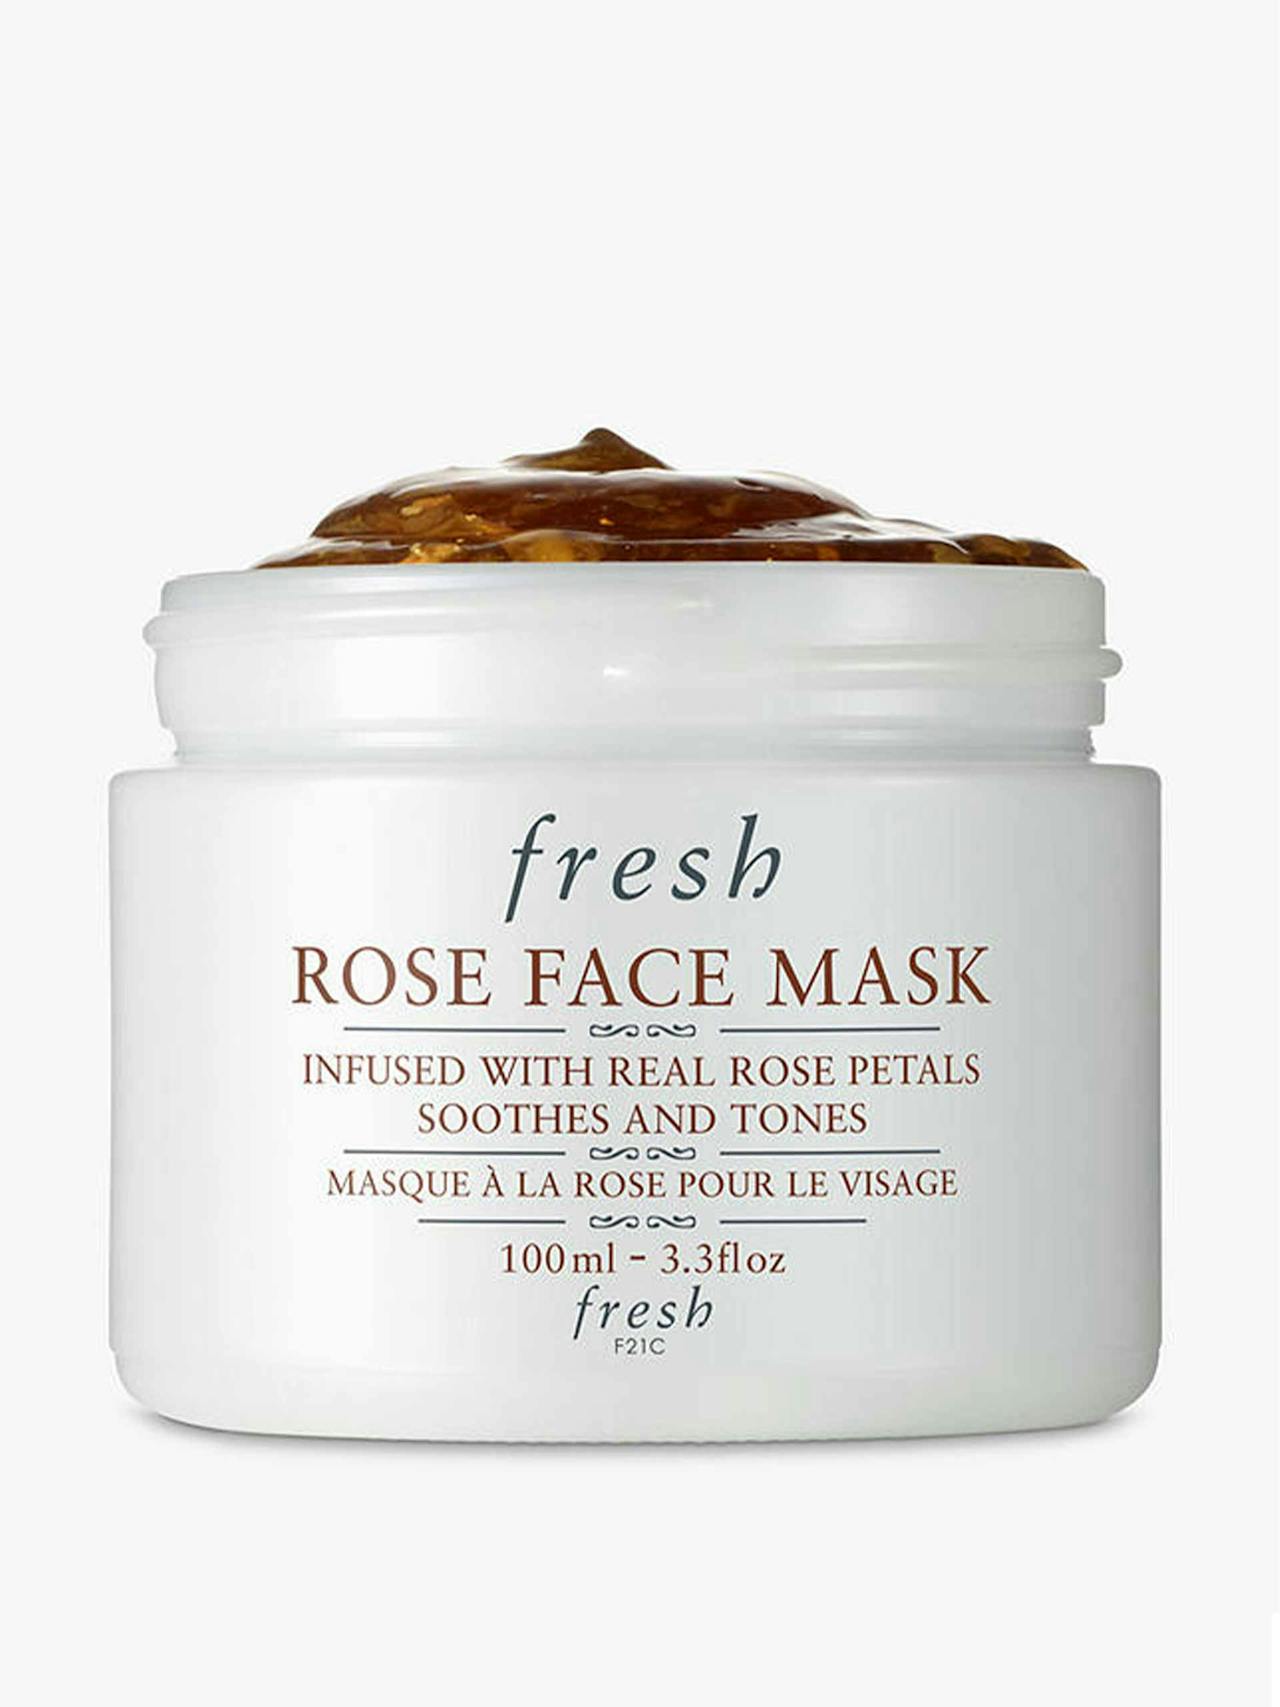 Rose face mask